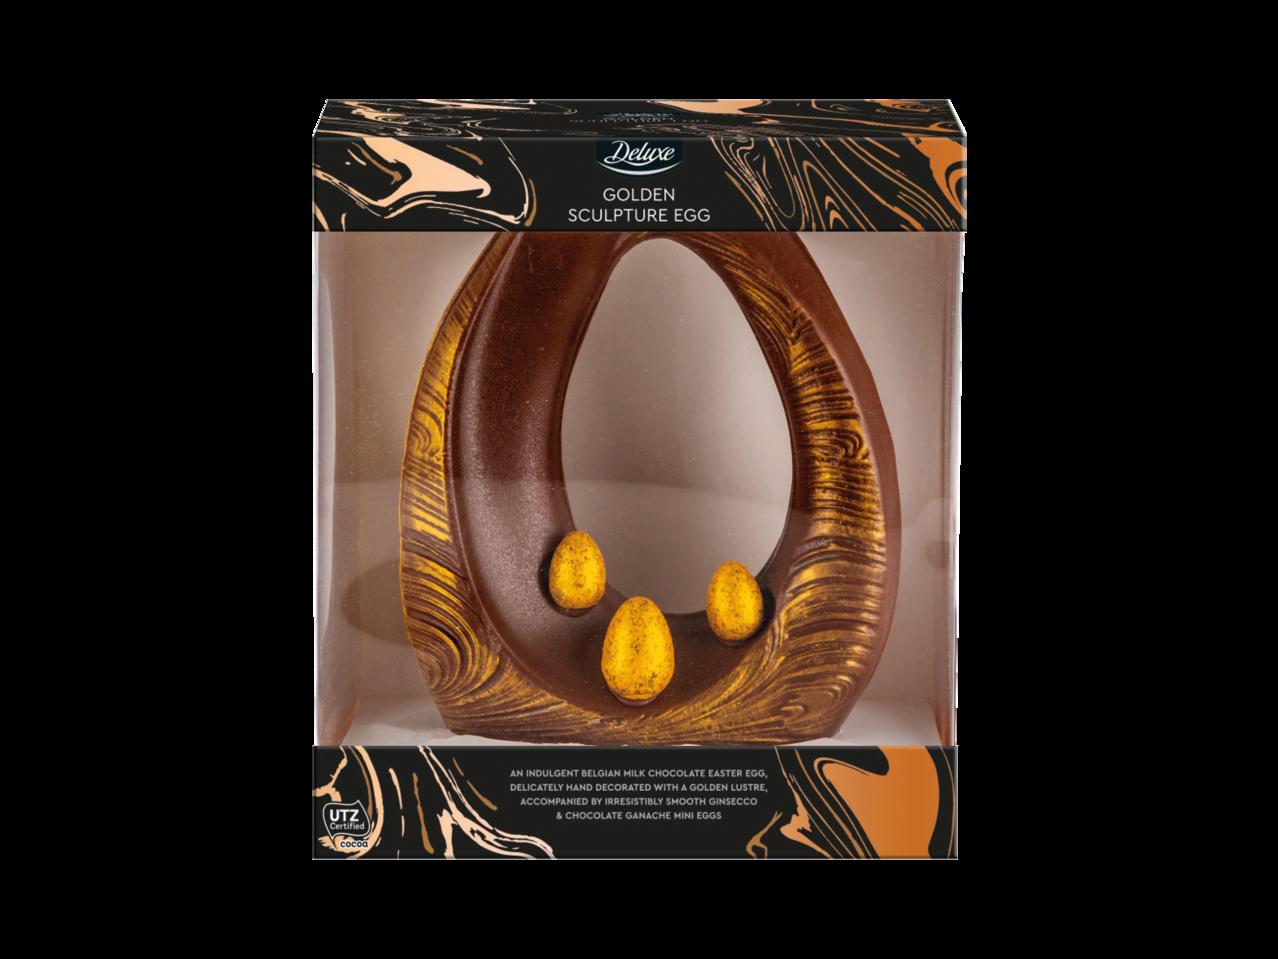 Golden Sculpture Egg with Ginsecco & Chocolate Ganache Mini Eggs